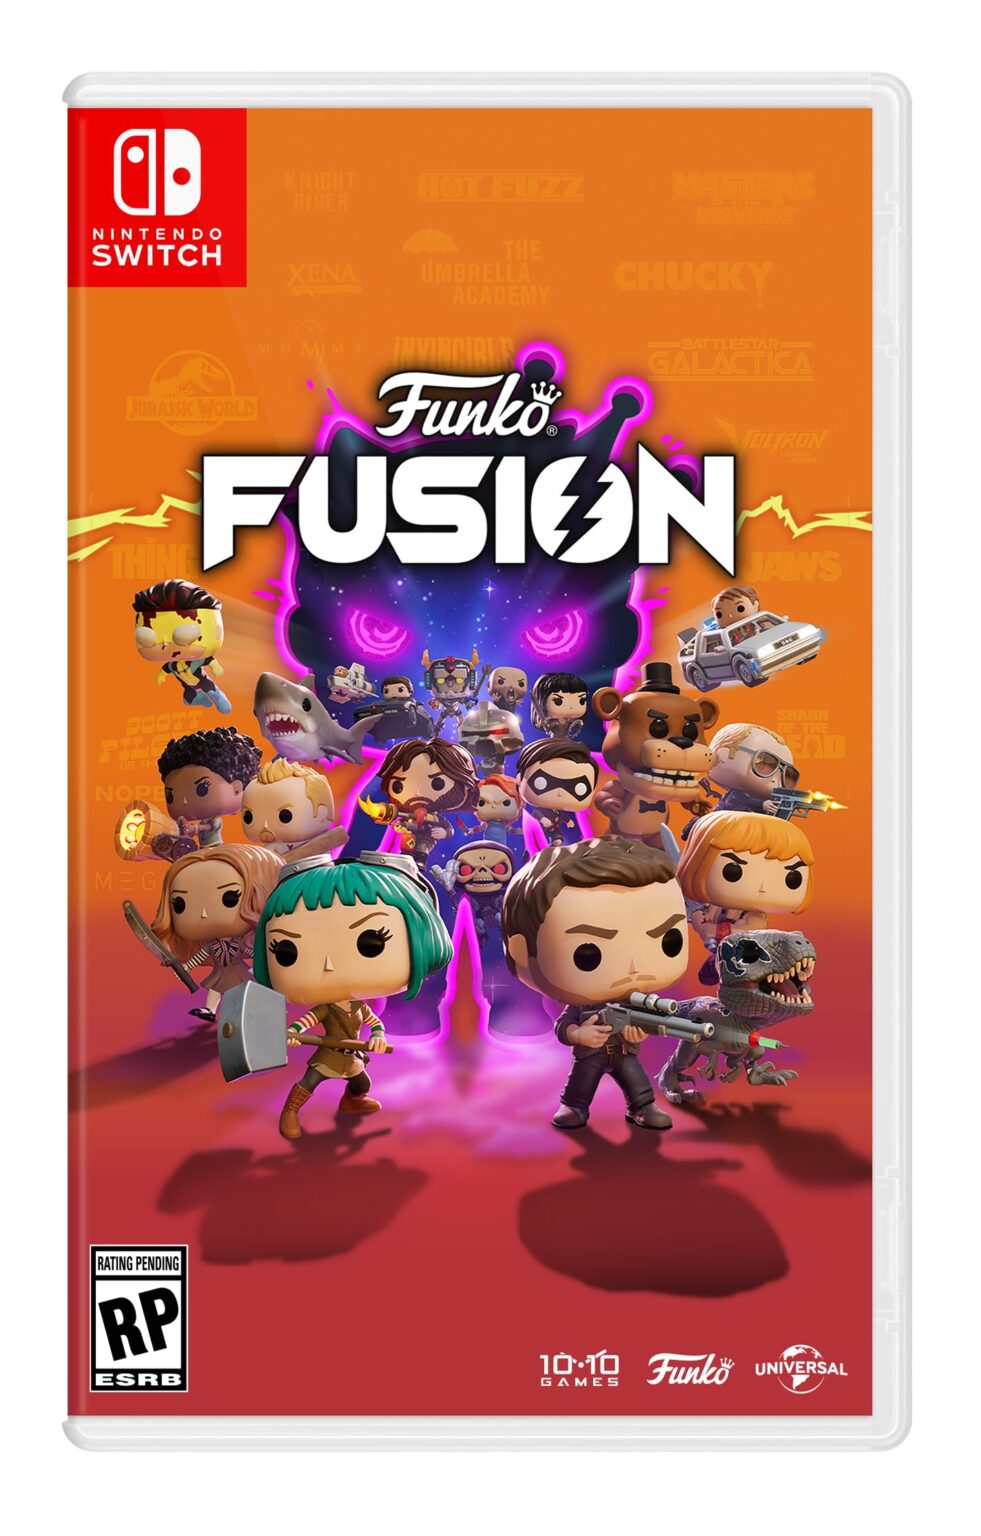 Funko Fusion Game Pass